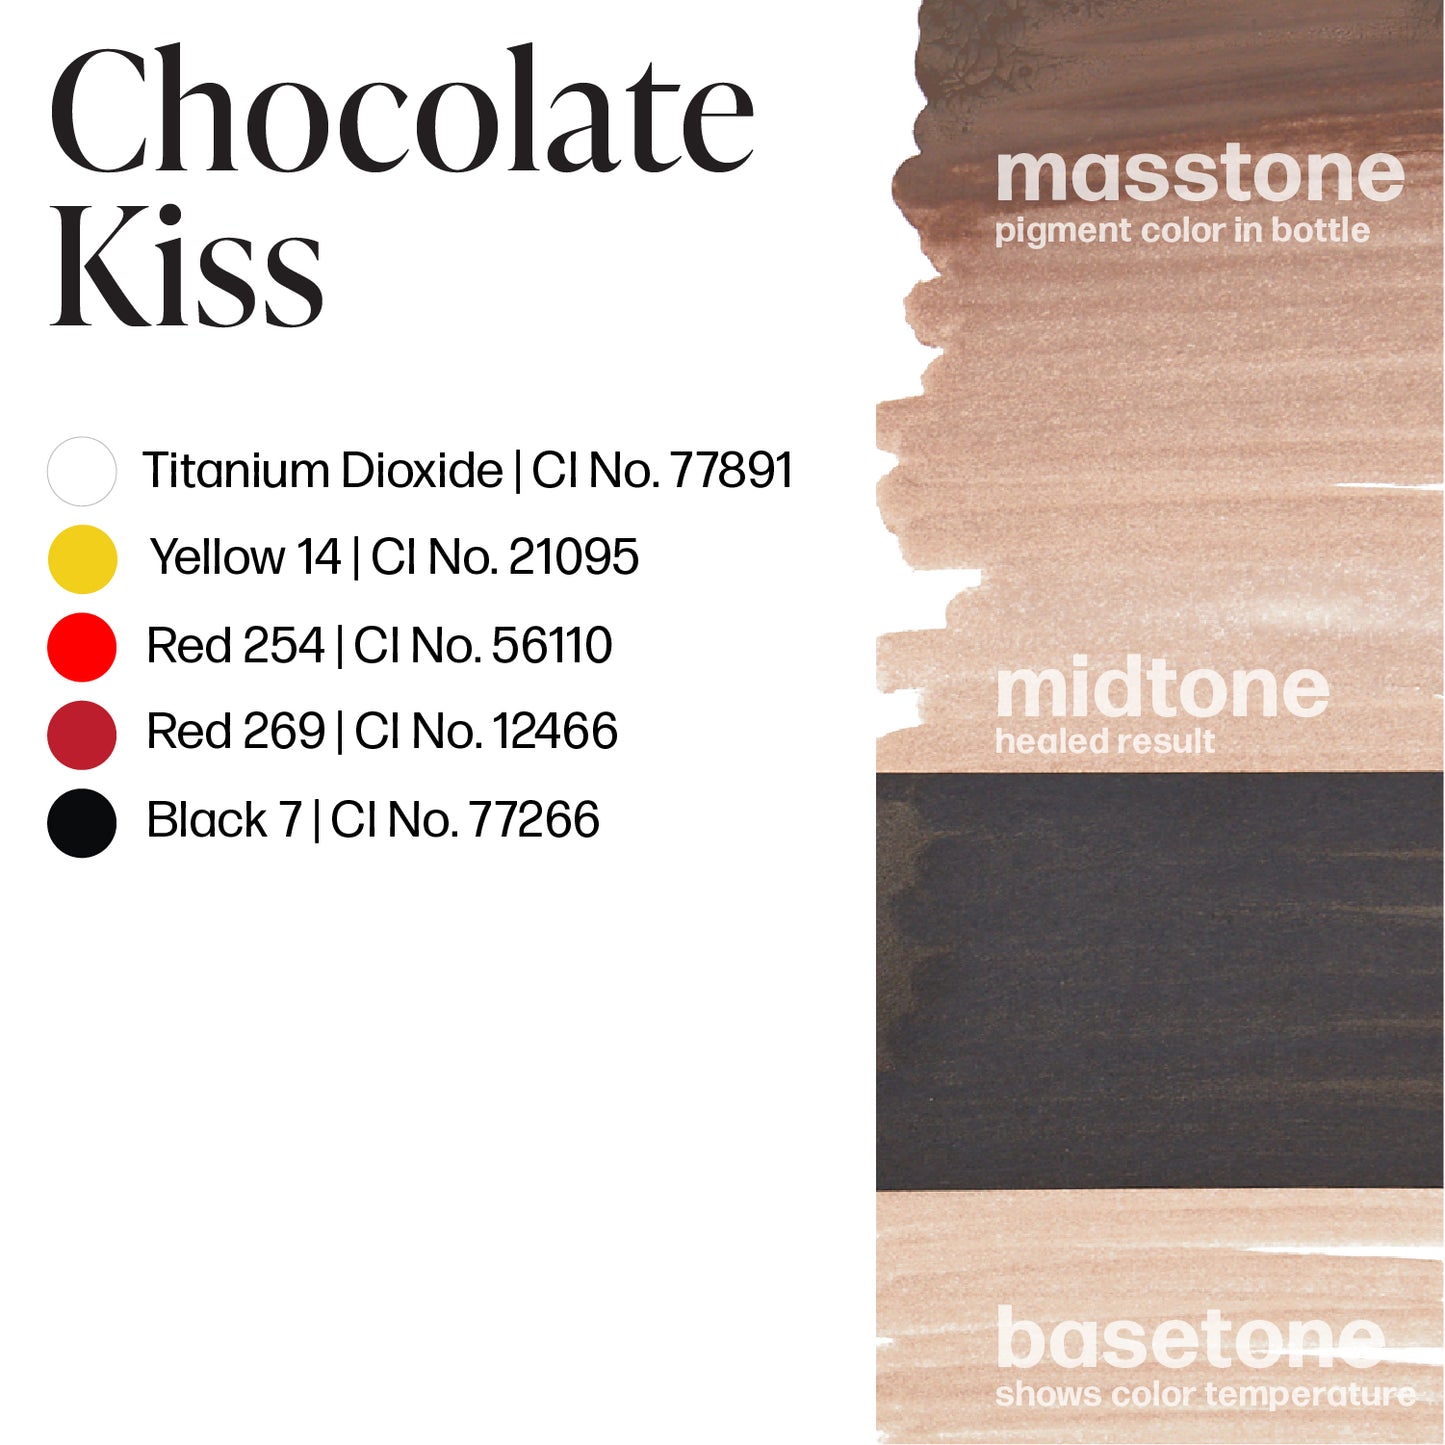 Chocolate Kiss